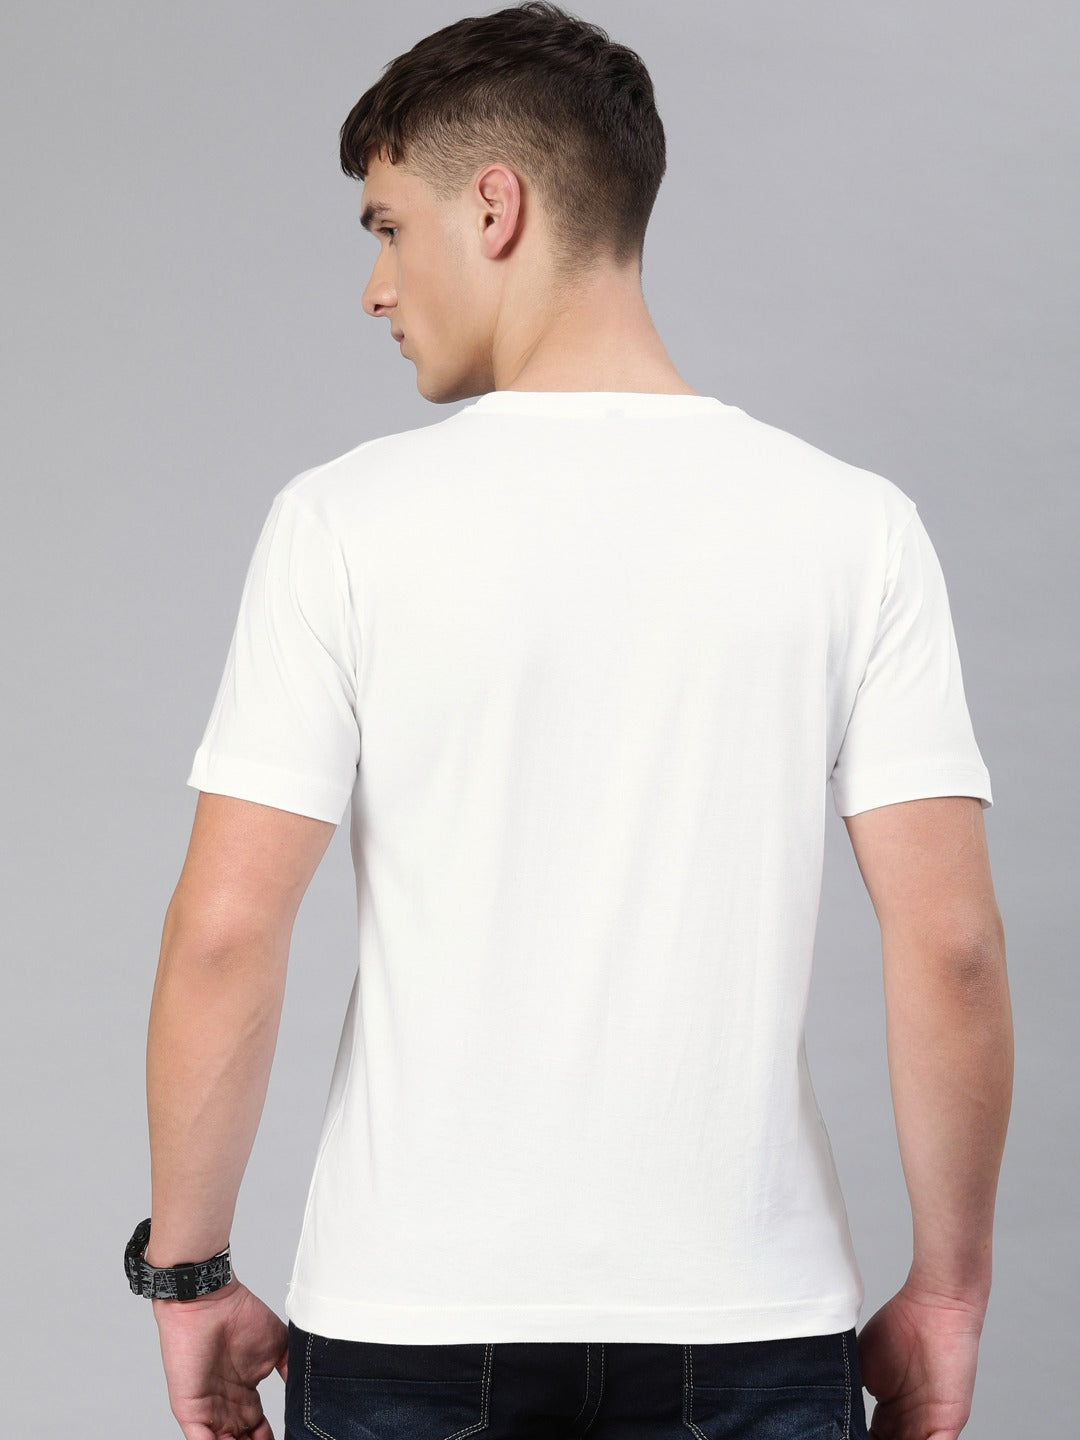 Buy Plain White T Shirts Online For Men In India Be Awara